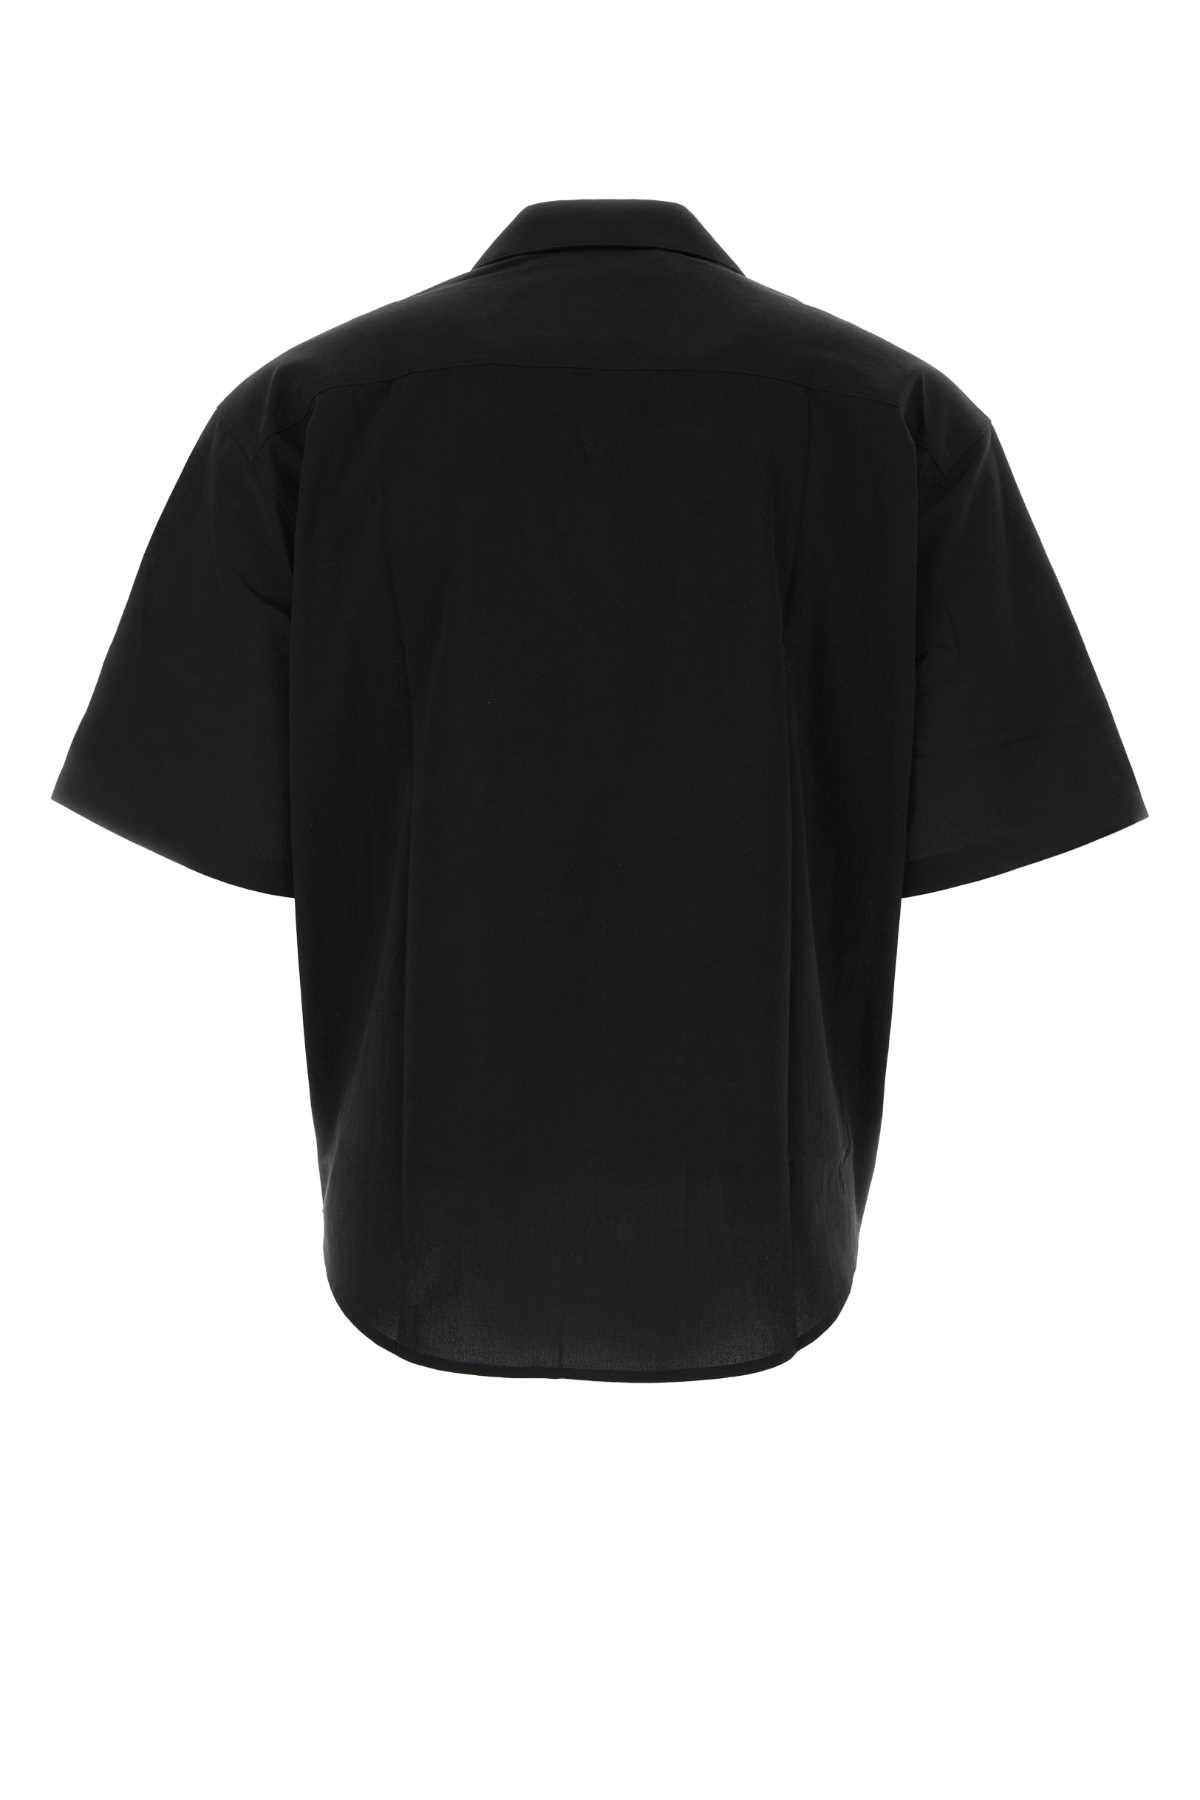 Shop Ami Alexandre Mattiussi Black Cotton Shirt